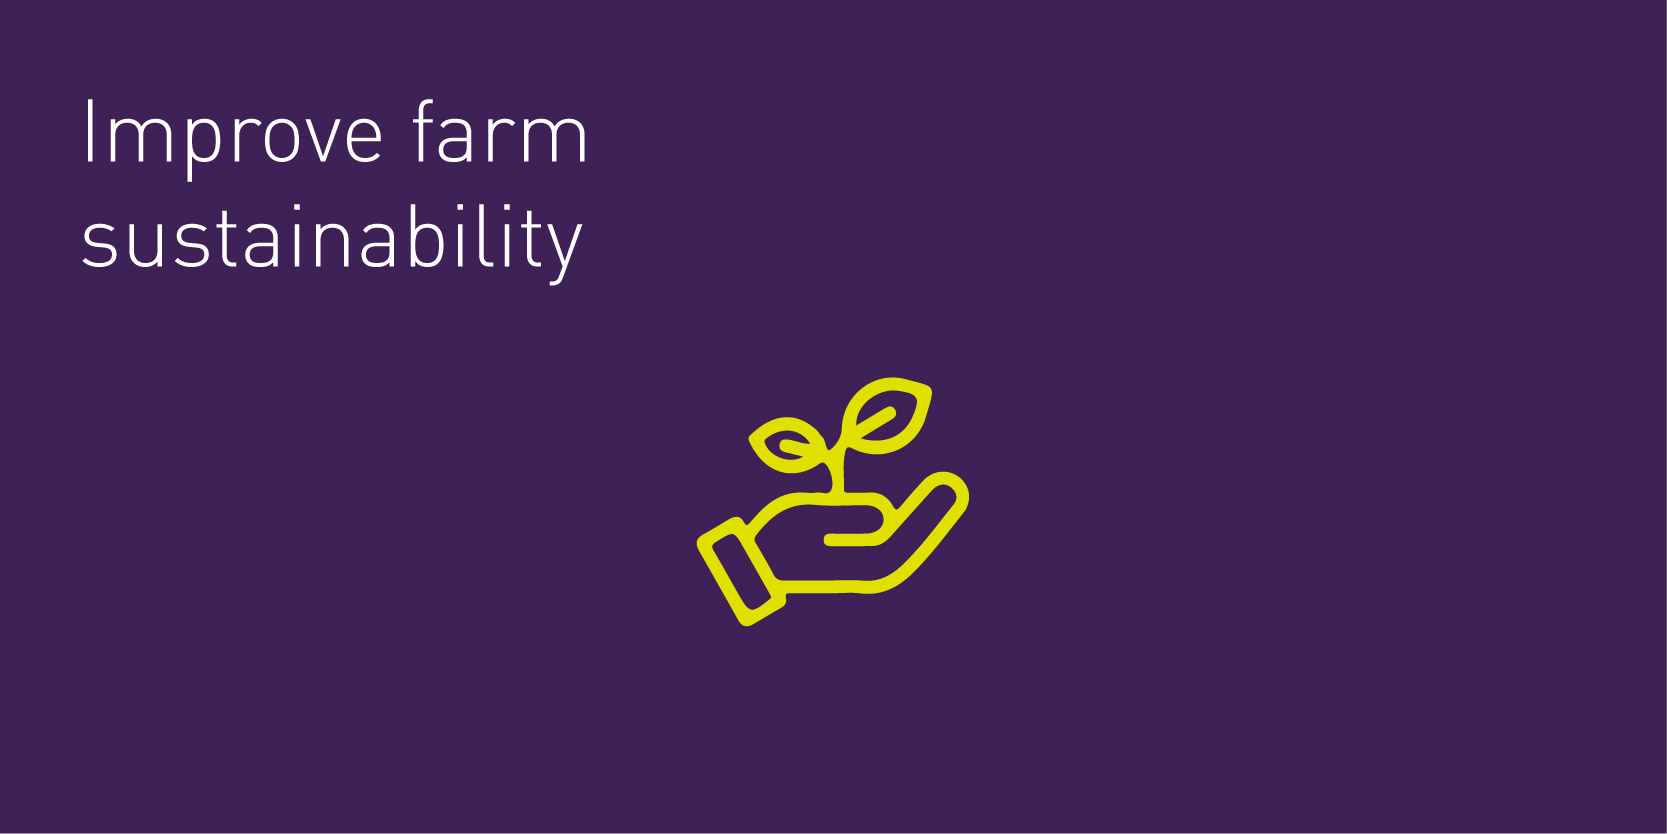 Farm sustainability